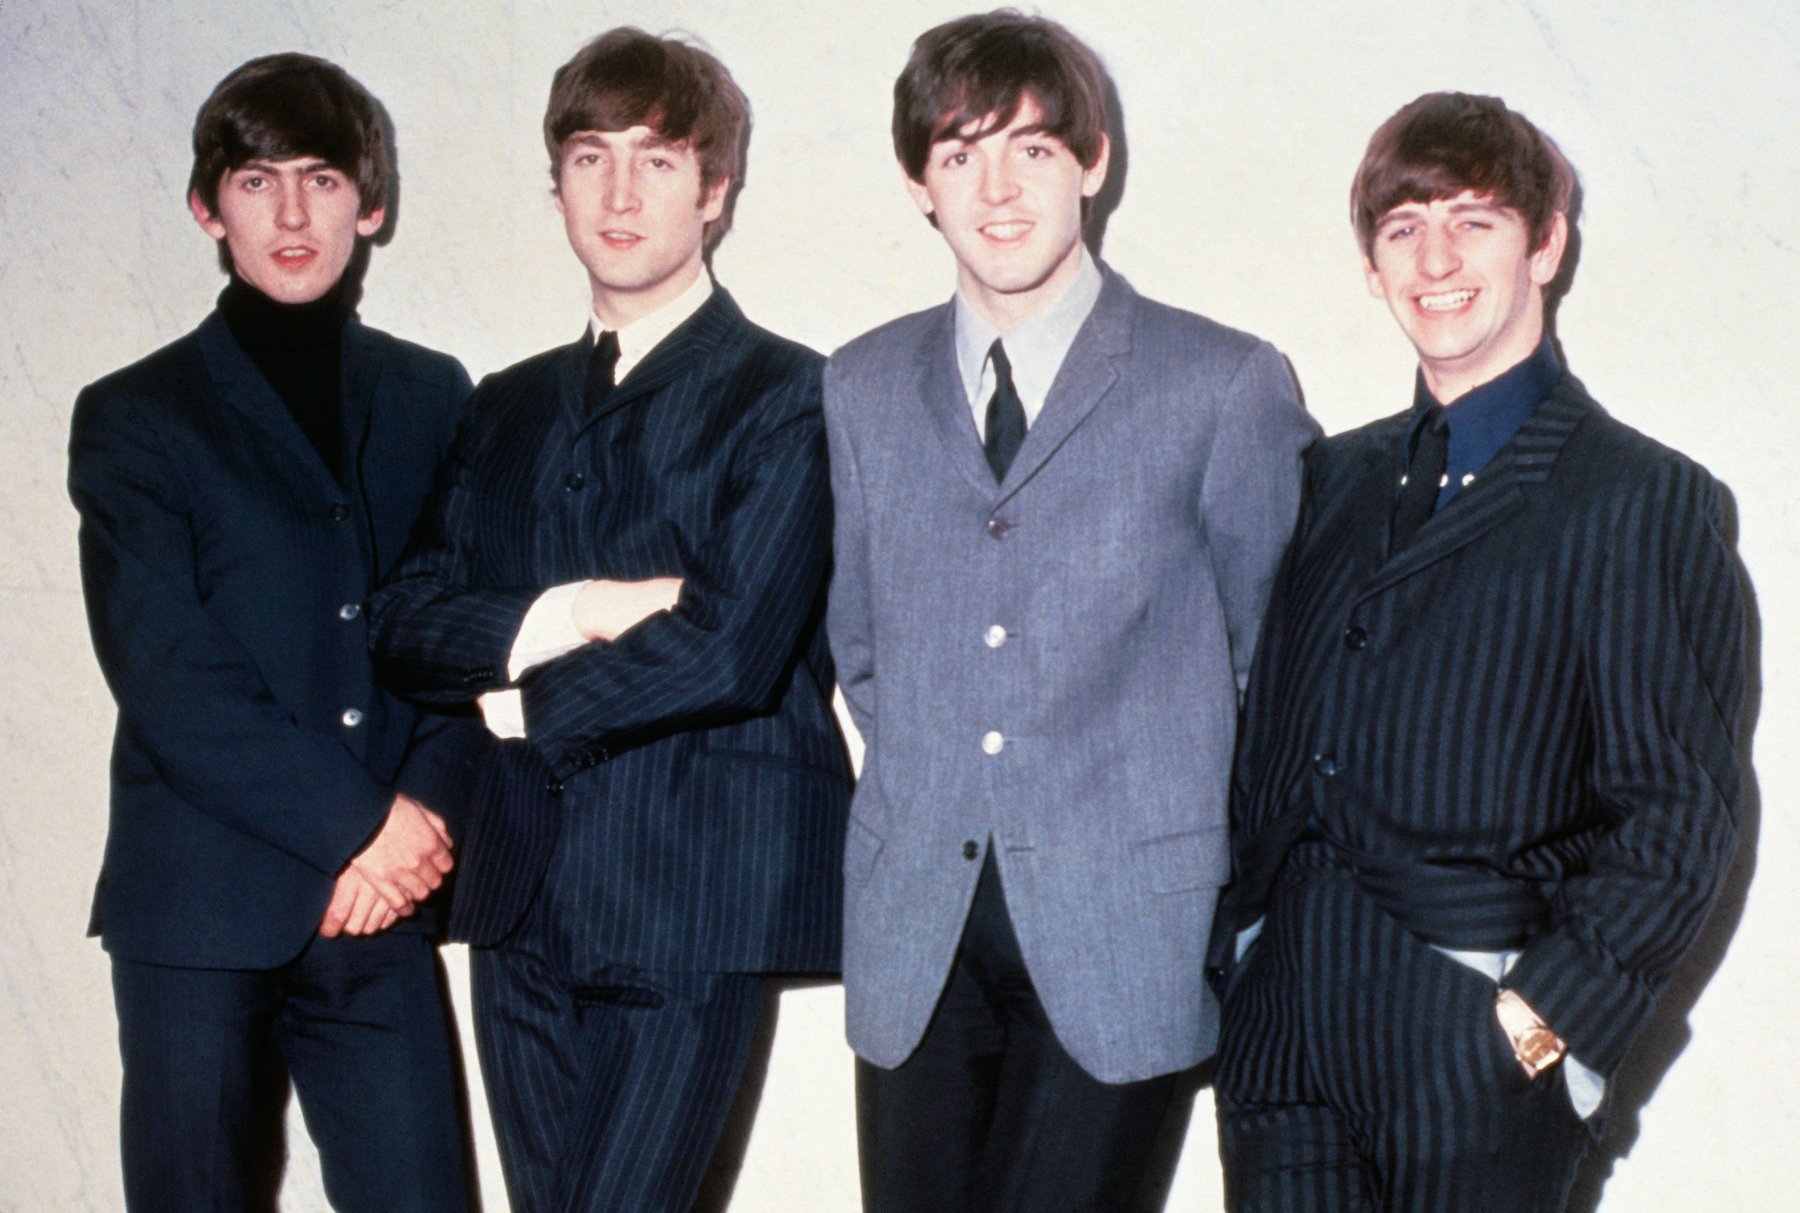 The Beatles (musicians George Harrison, John Lennon, Paul McCartney and Ringo Starr) circa 1965